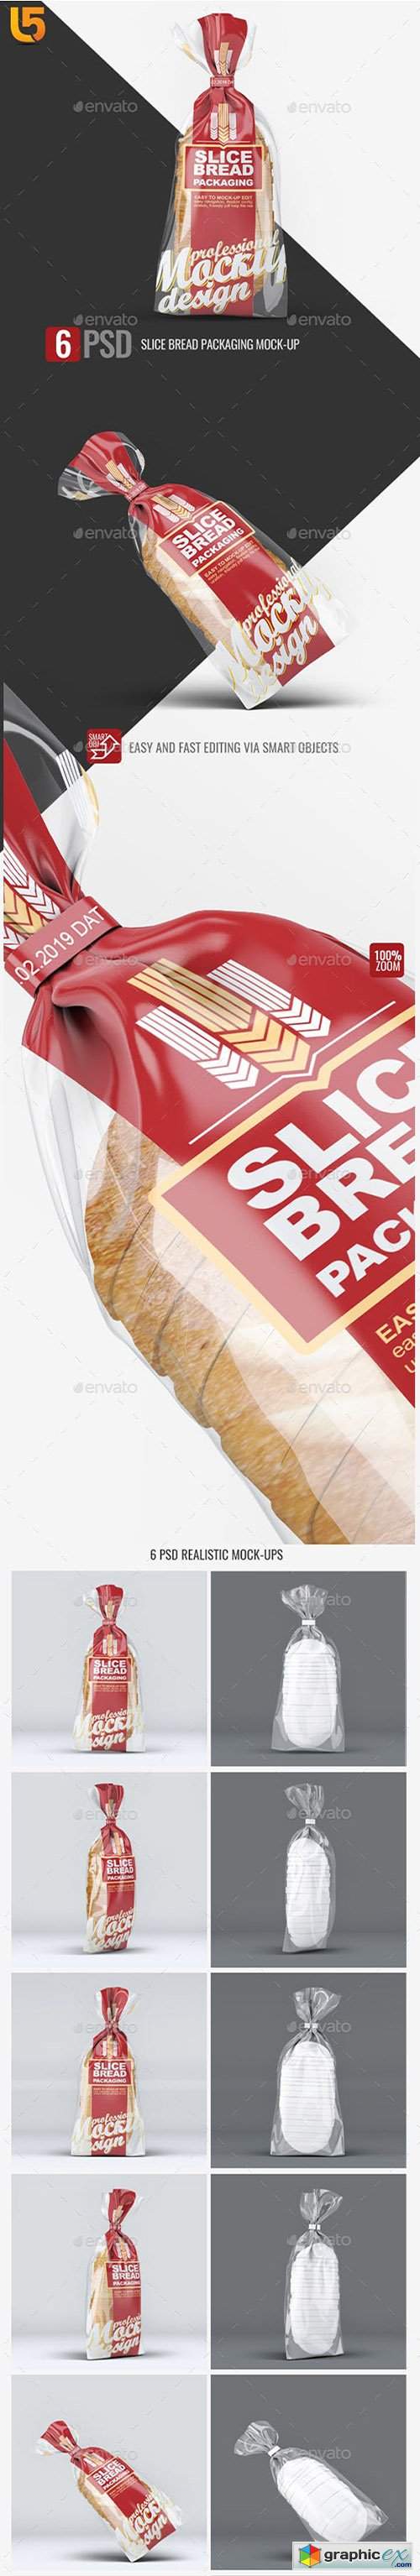 Slice Bread Packaging Mock-Up 23293889